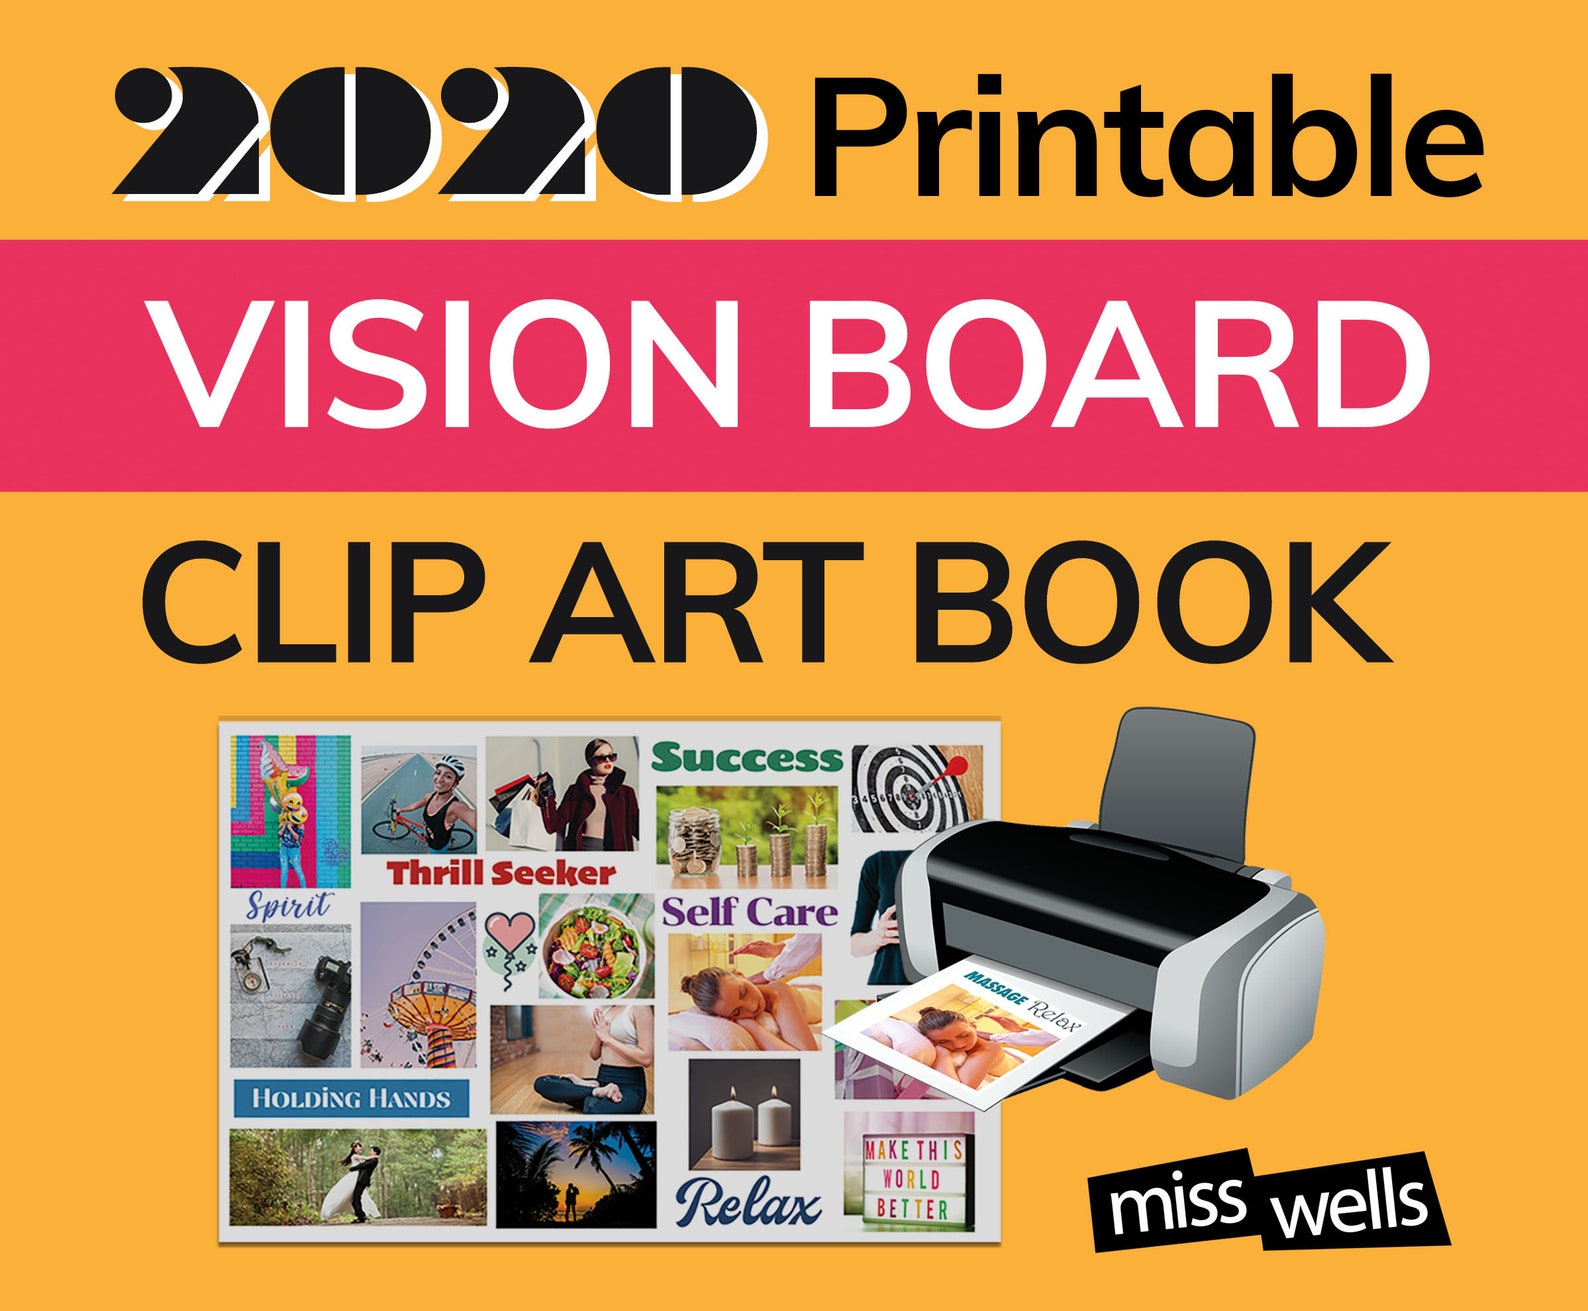 2020 Printable Vision Board Clip Art Book Etsy Finland